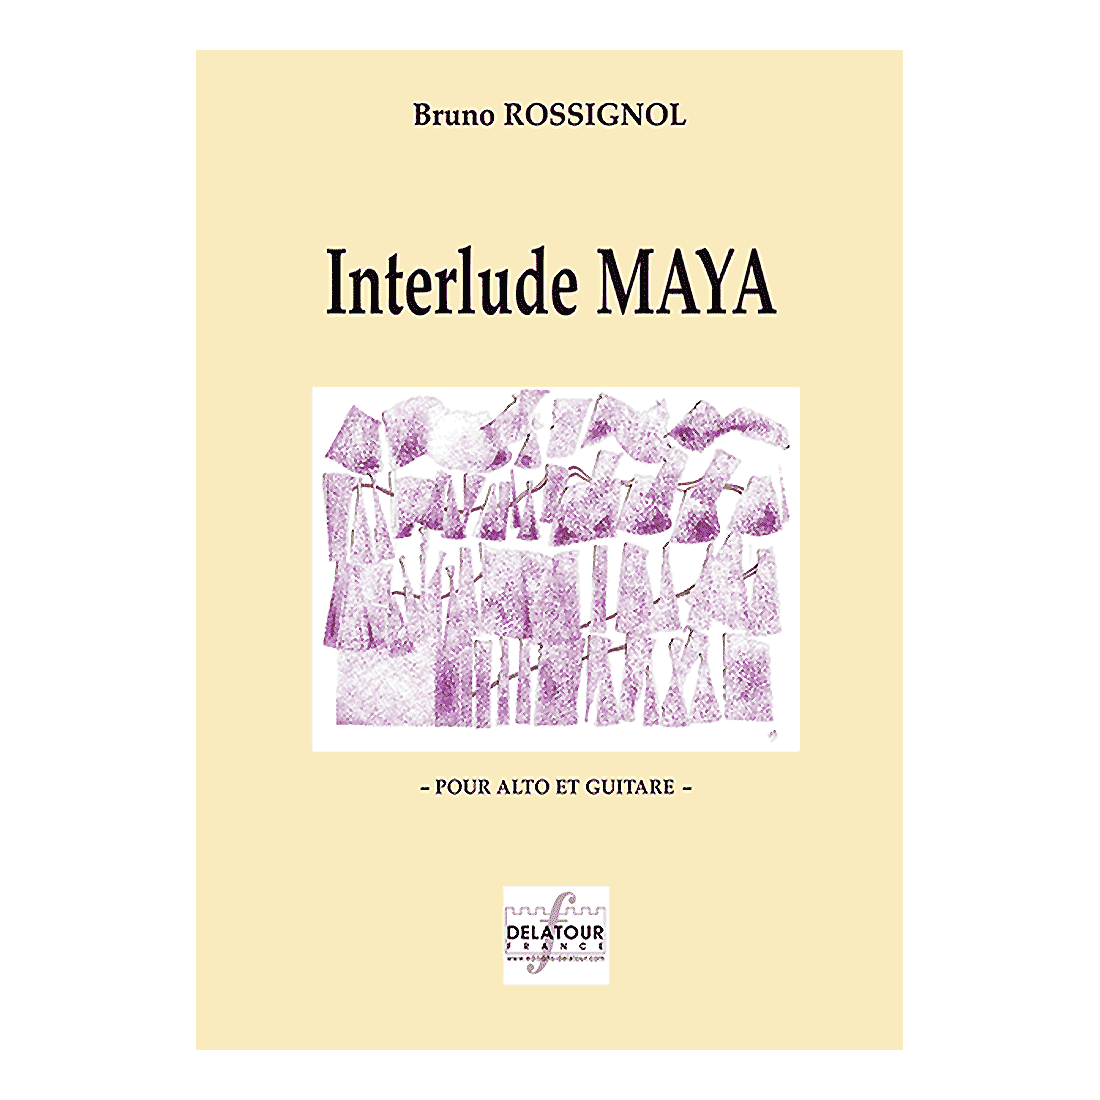 Interlude Maya for viola and guitar